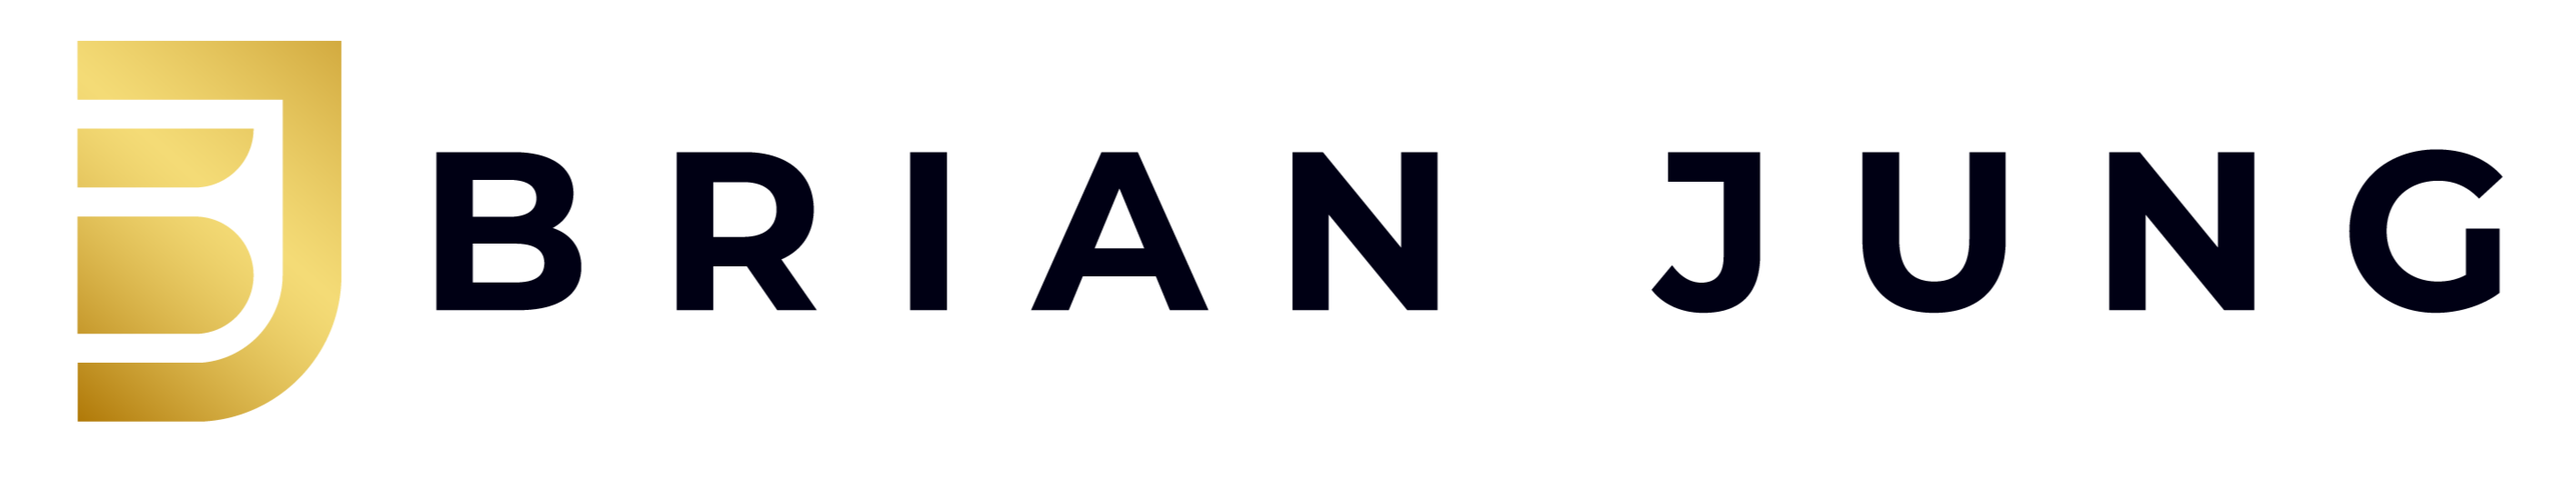 Creator Pilot - Brian Jung Logo